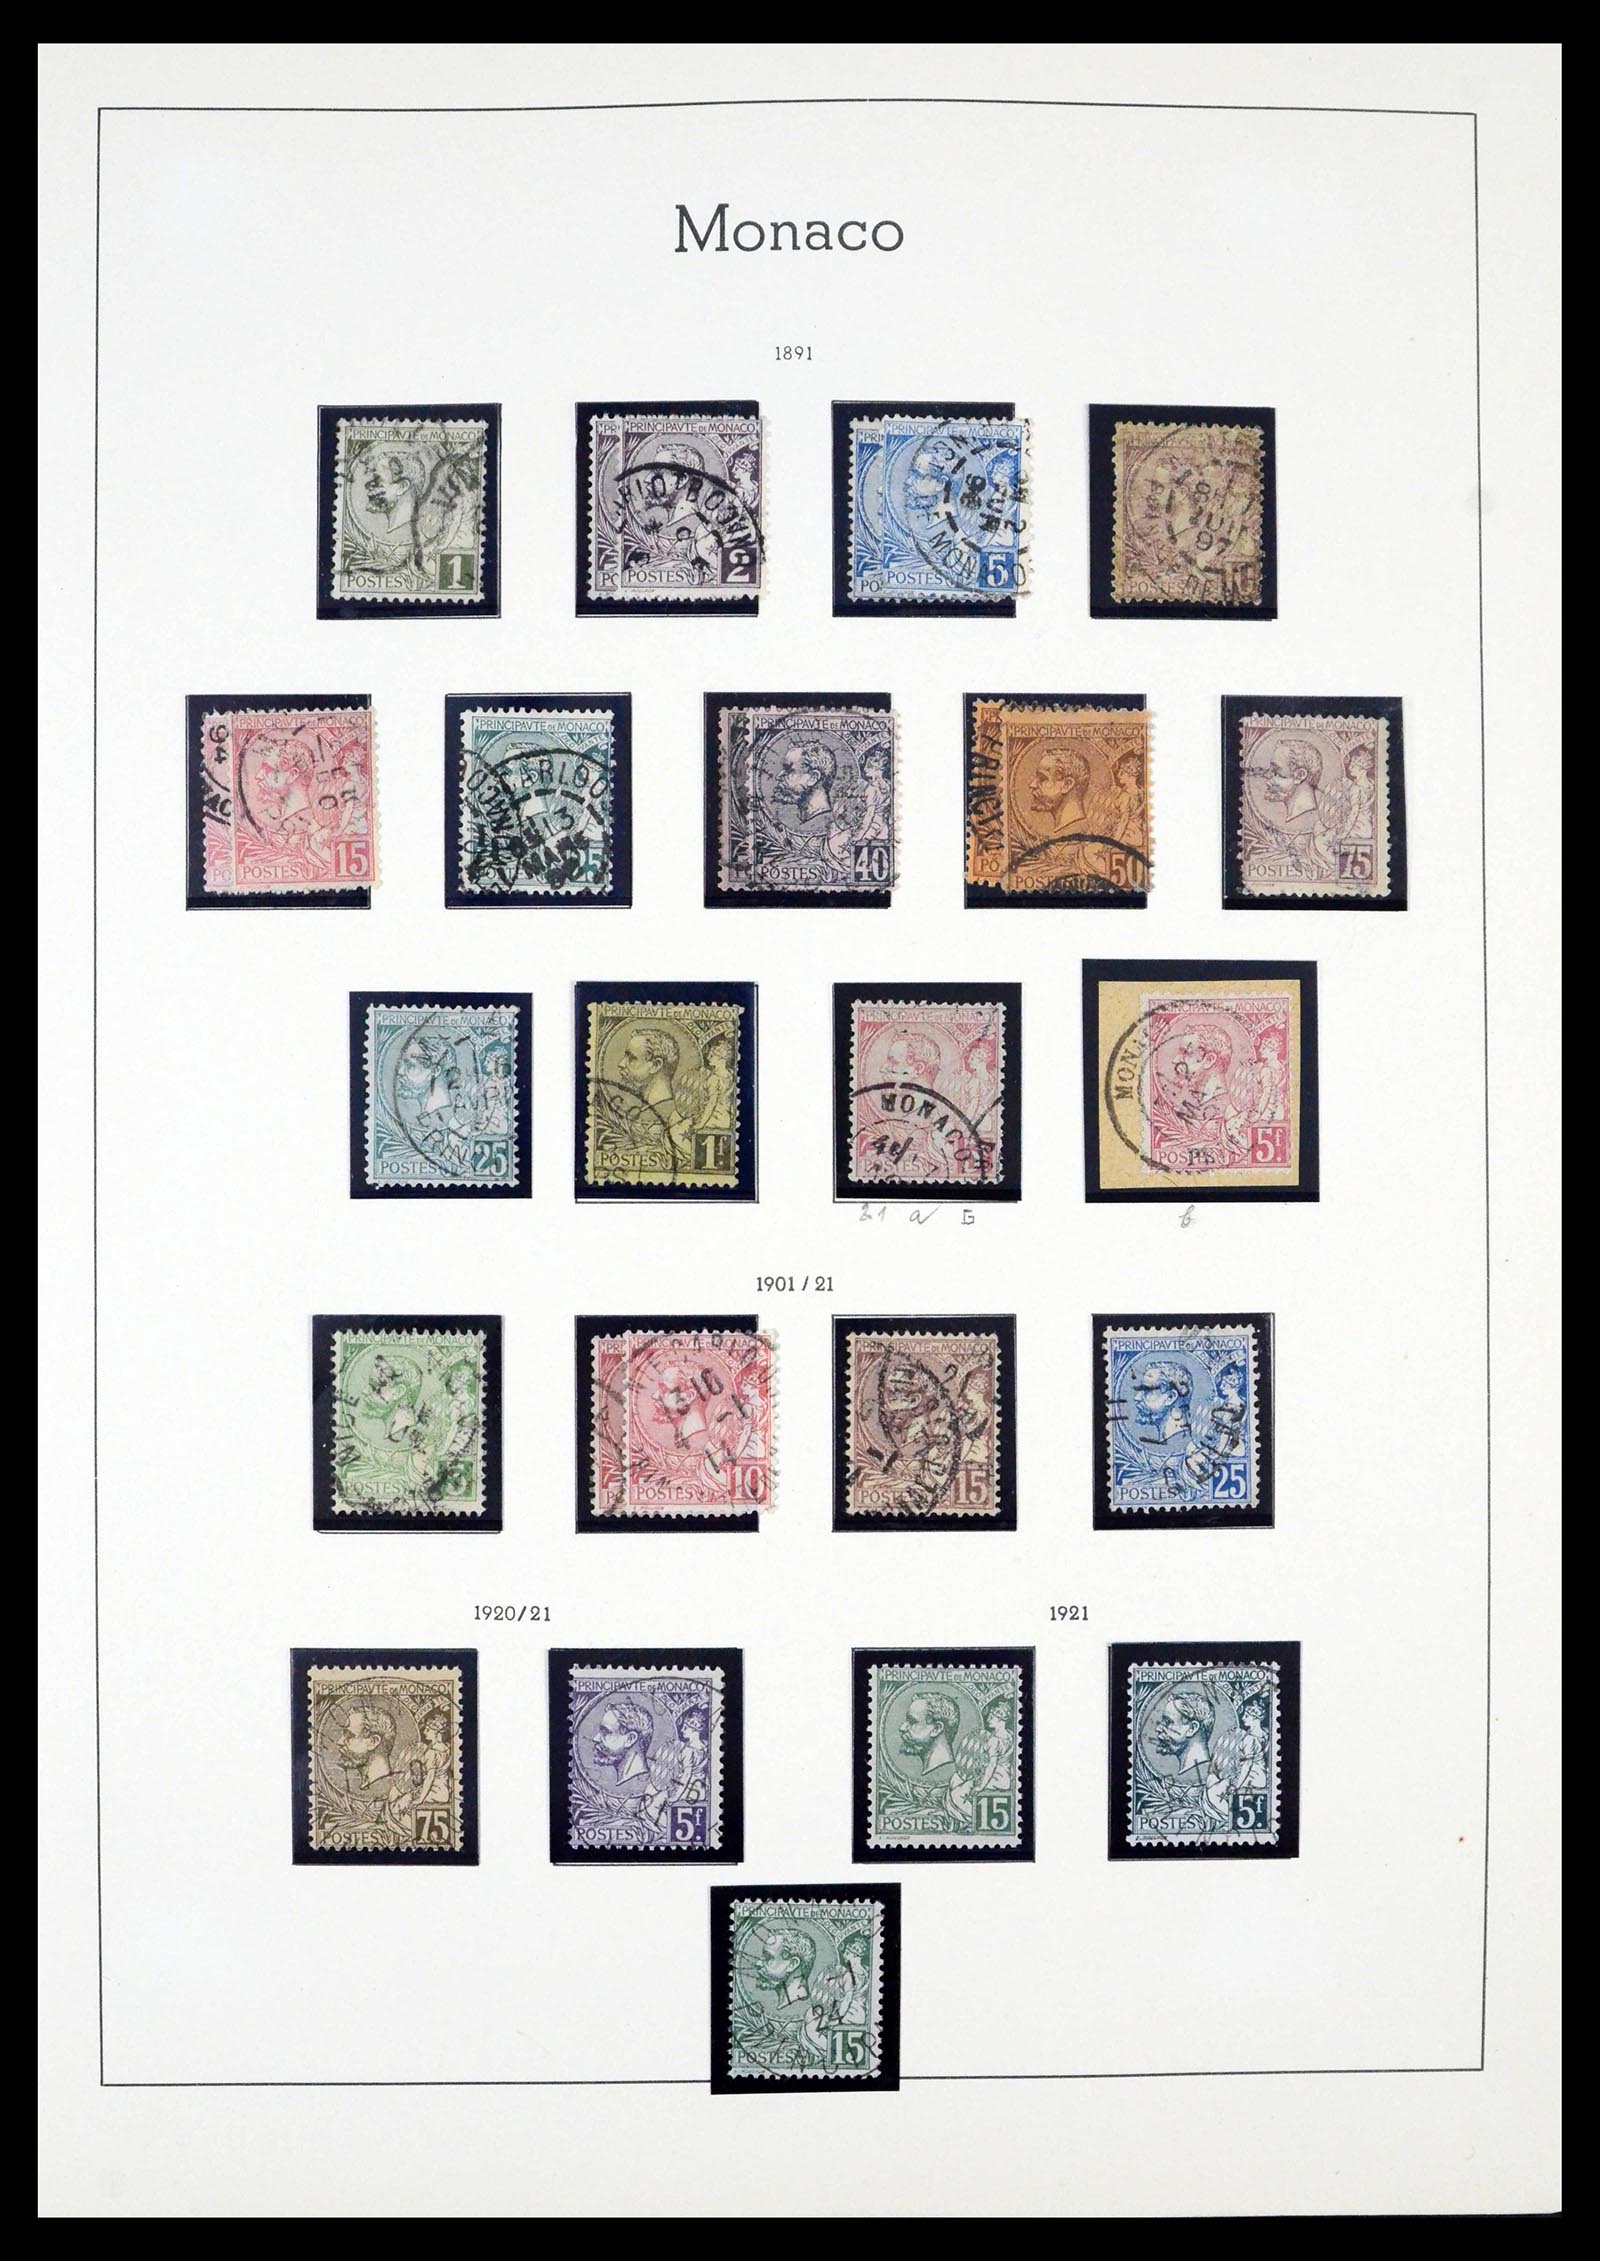 39392 0002 - Stamp collection 39392 Monaco 1885-1999.